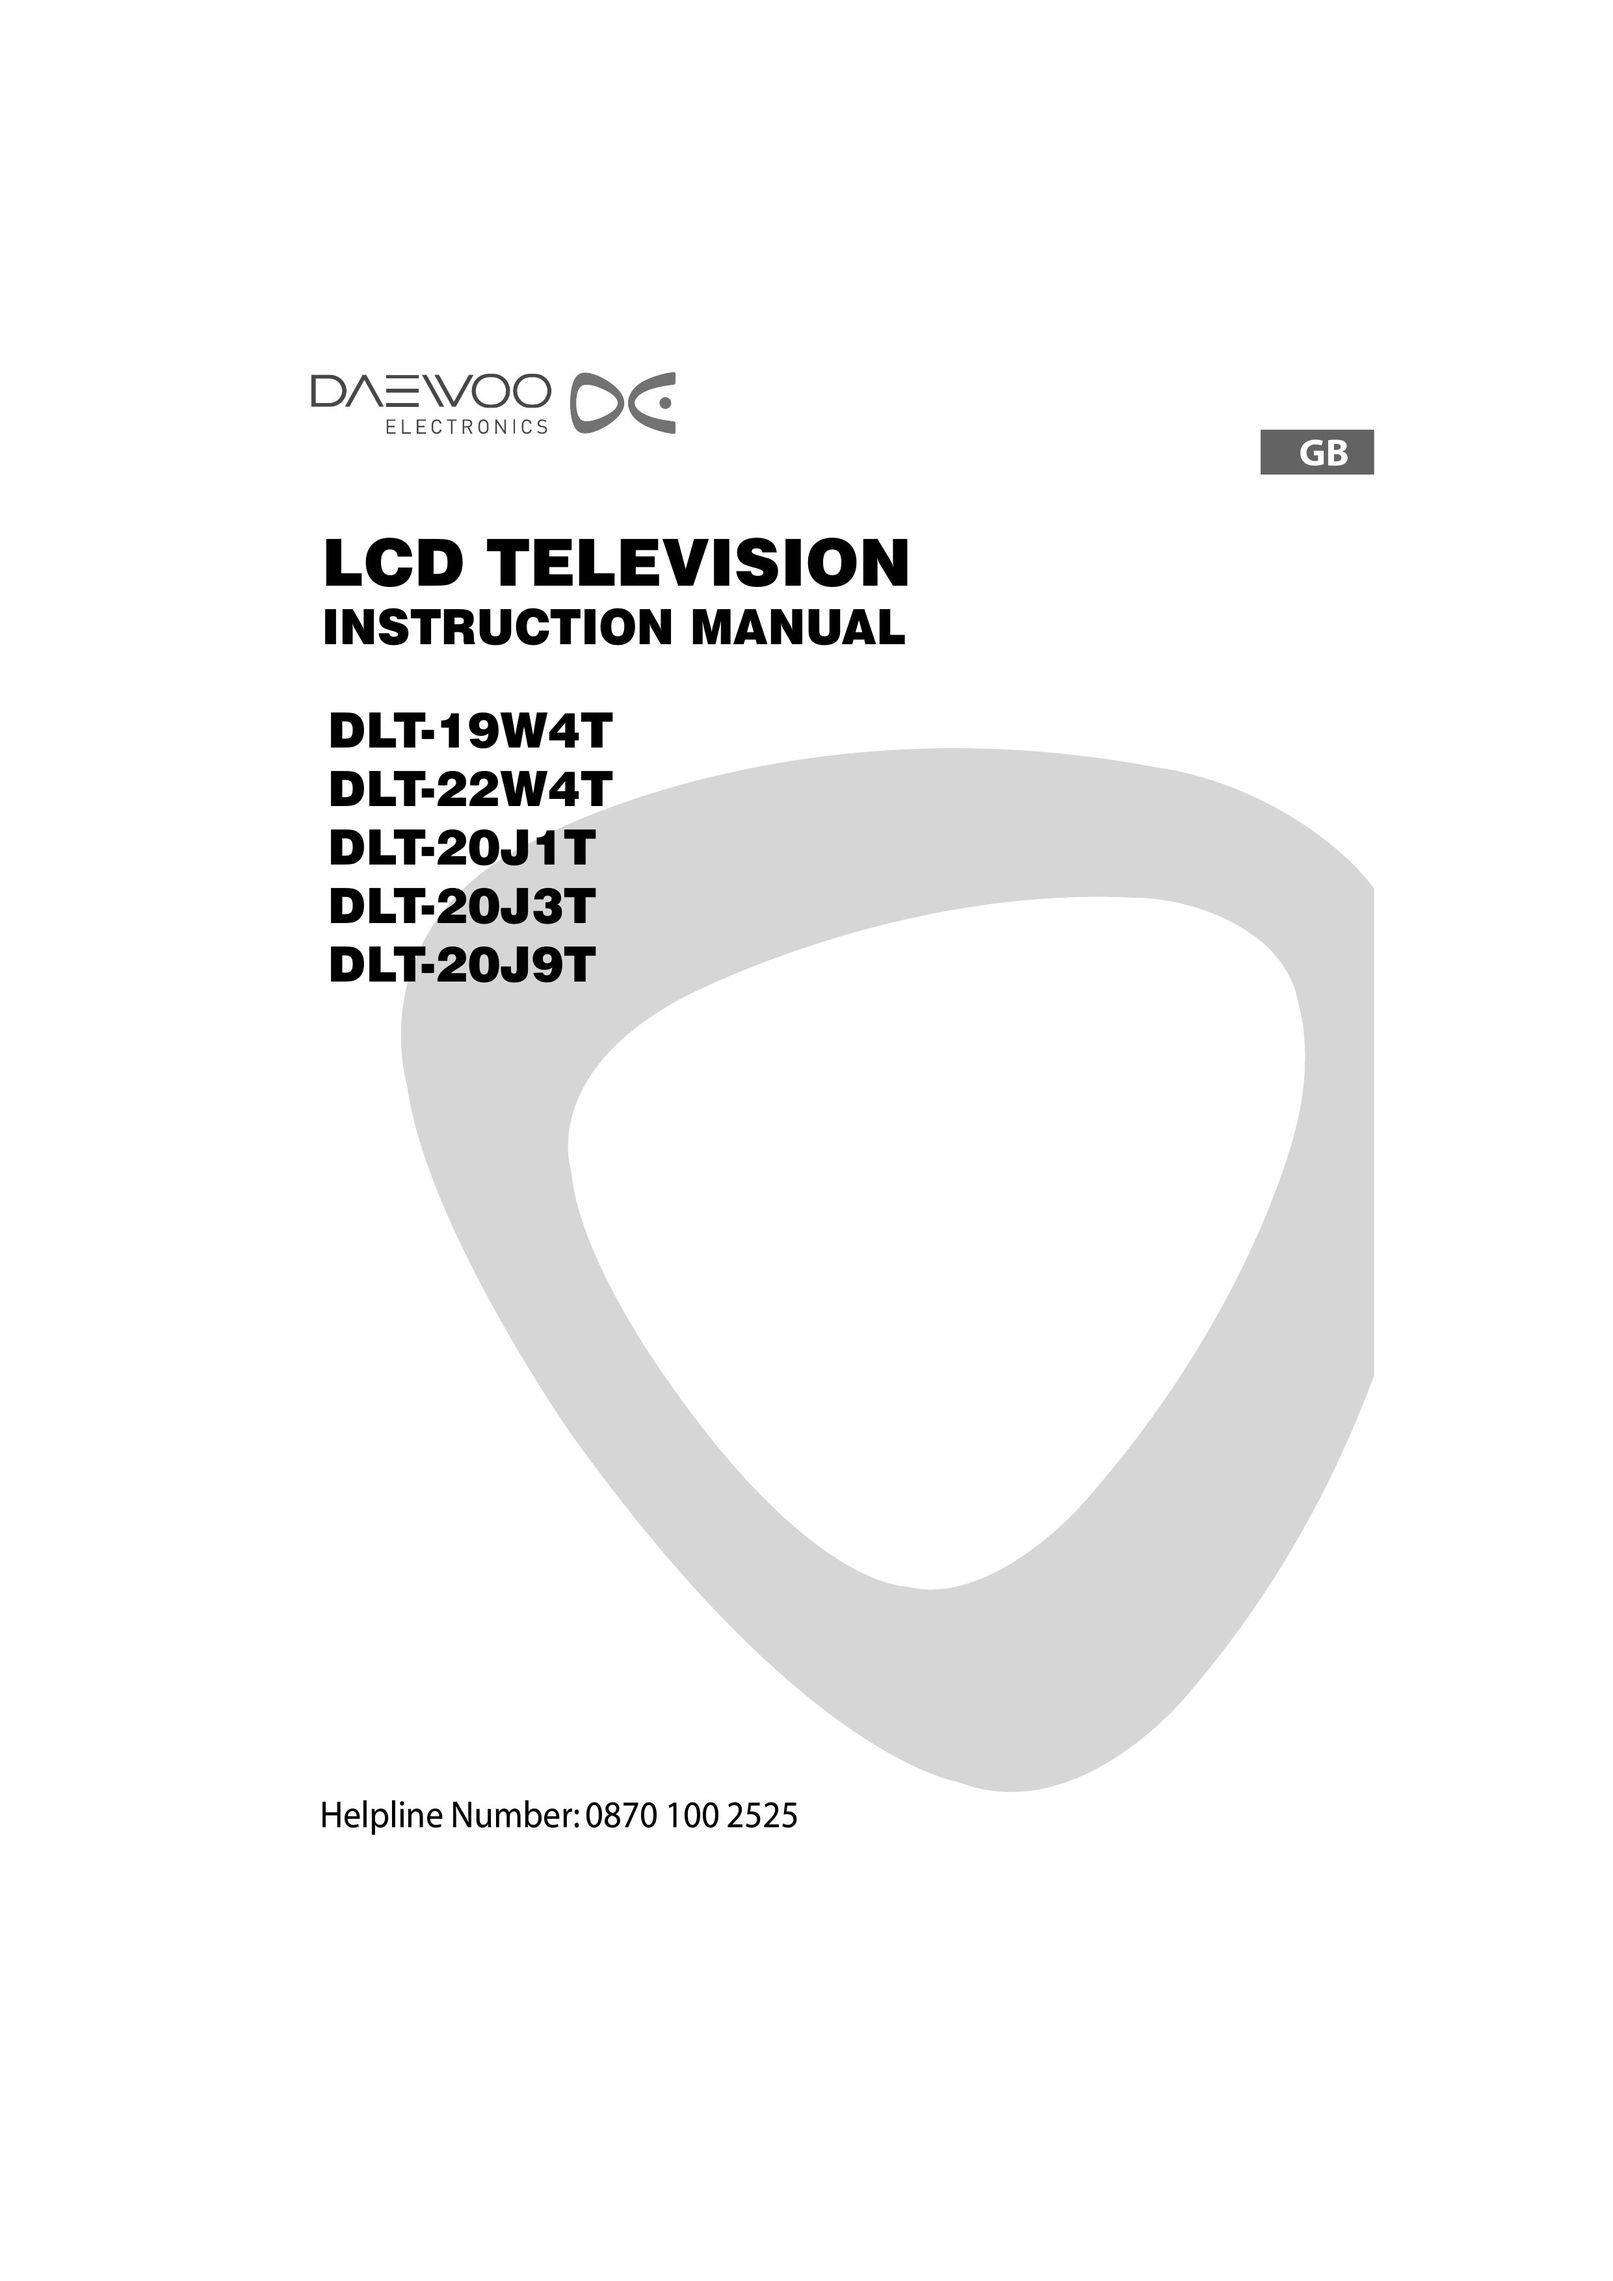 Daewoo DLT-20J1T Flat Panel Television User Manual